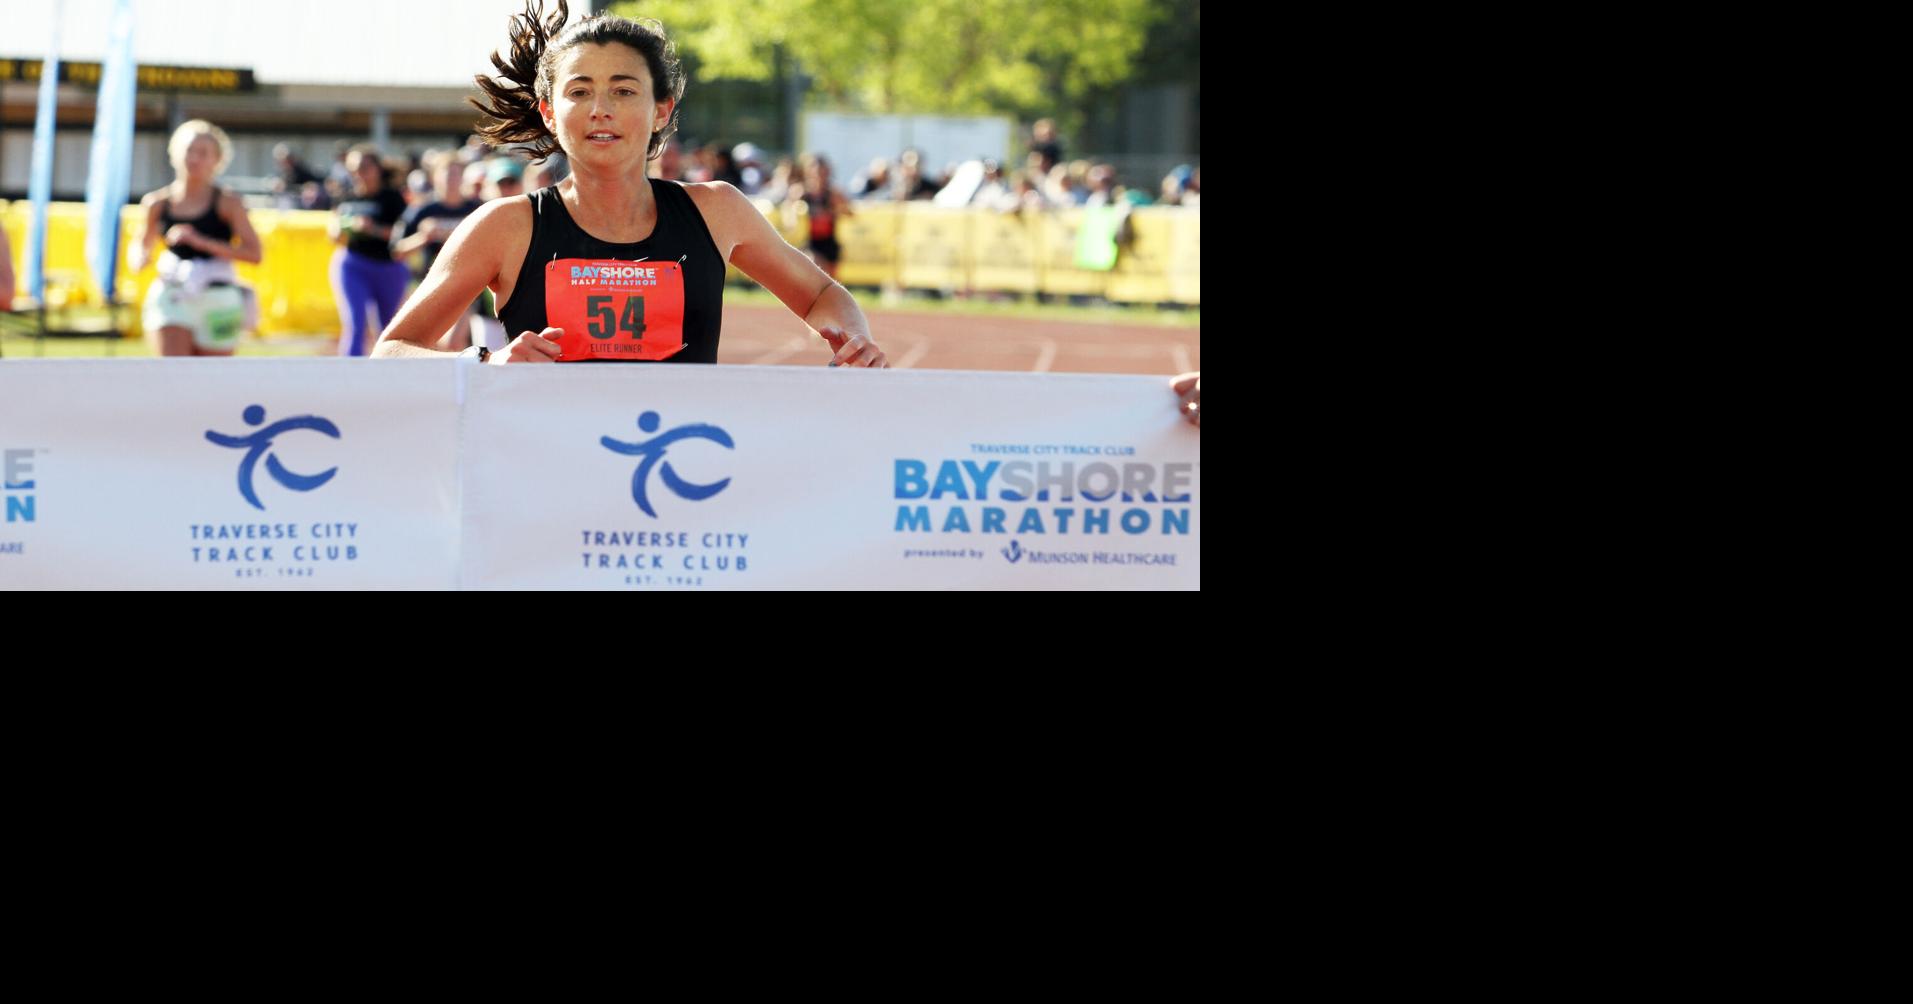 Bayshore Marathon half marathon results Nation/World Sports record